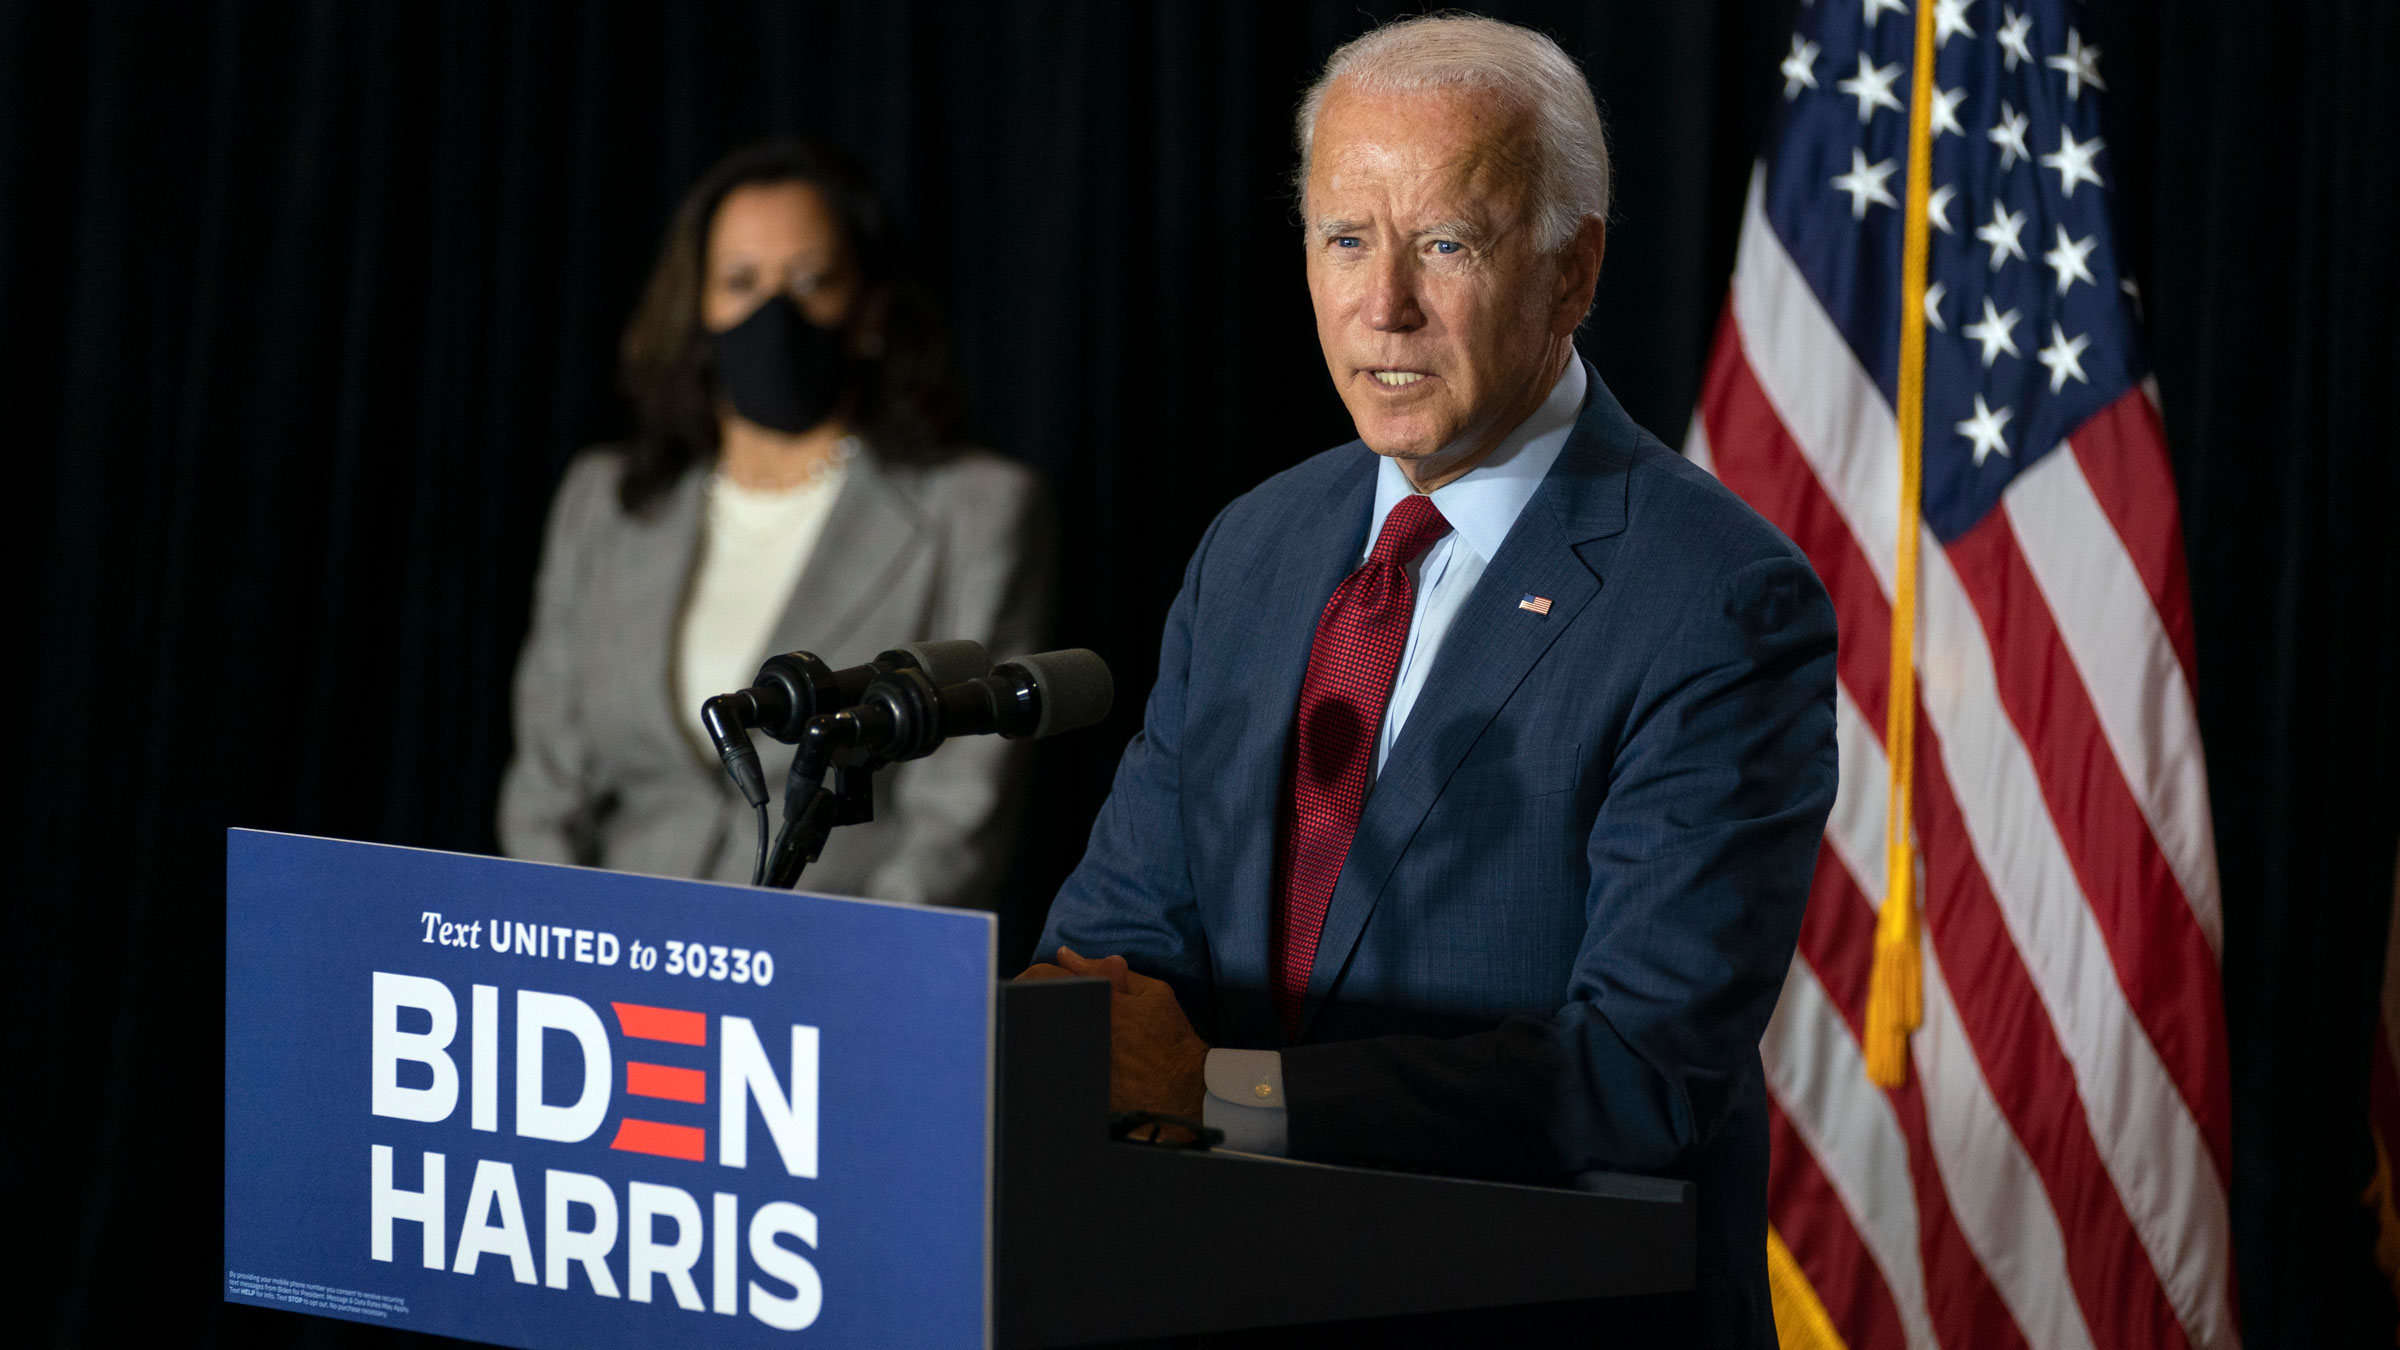 Joe Biden, the presumptive Democratic presidential nominee, speaks in Wilmington, Delaware, on Thursday.